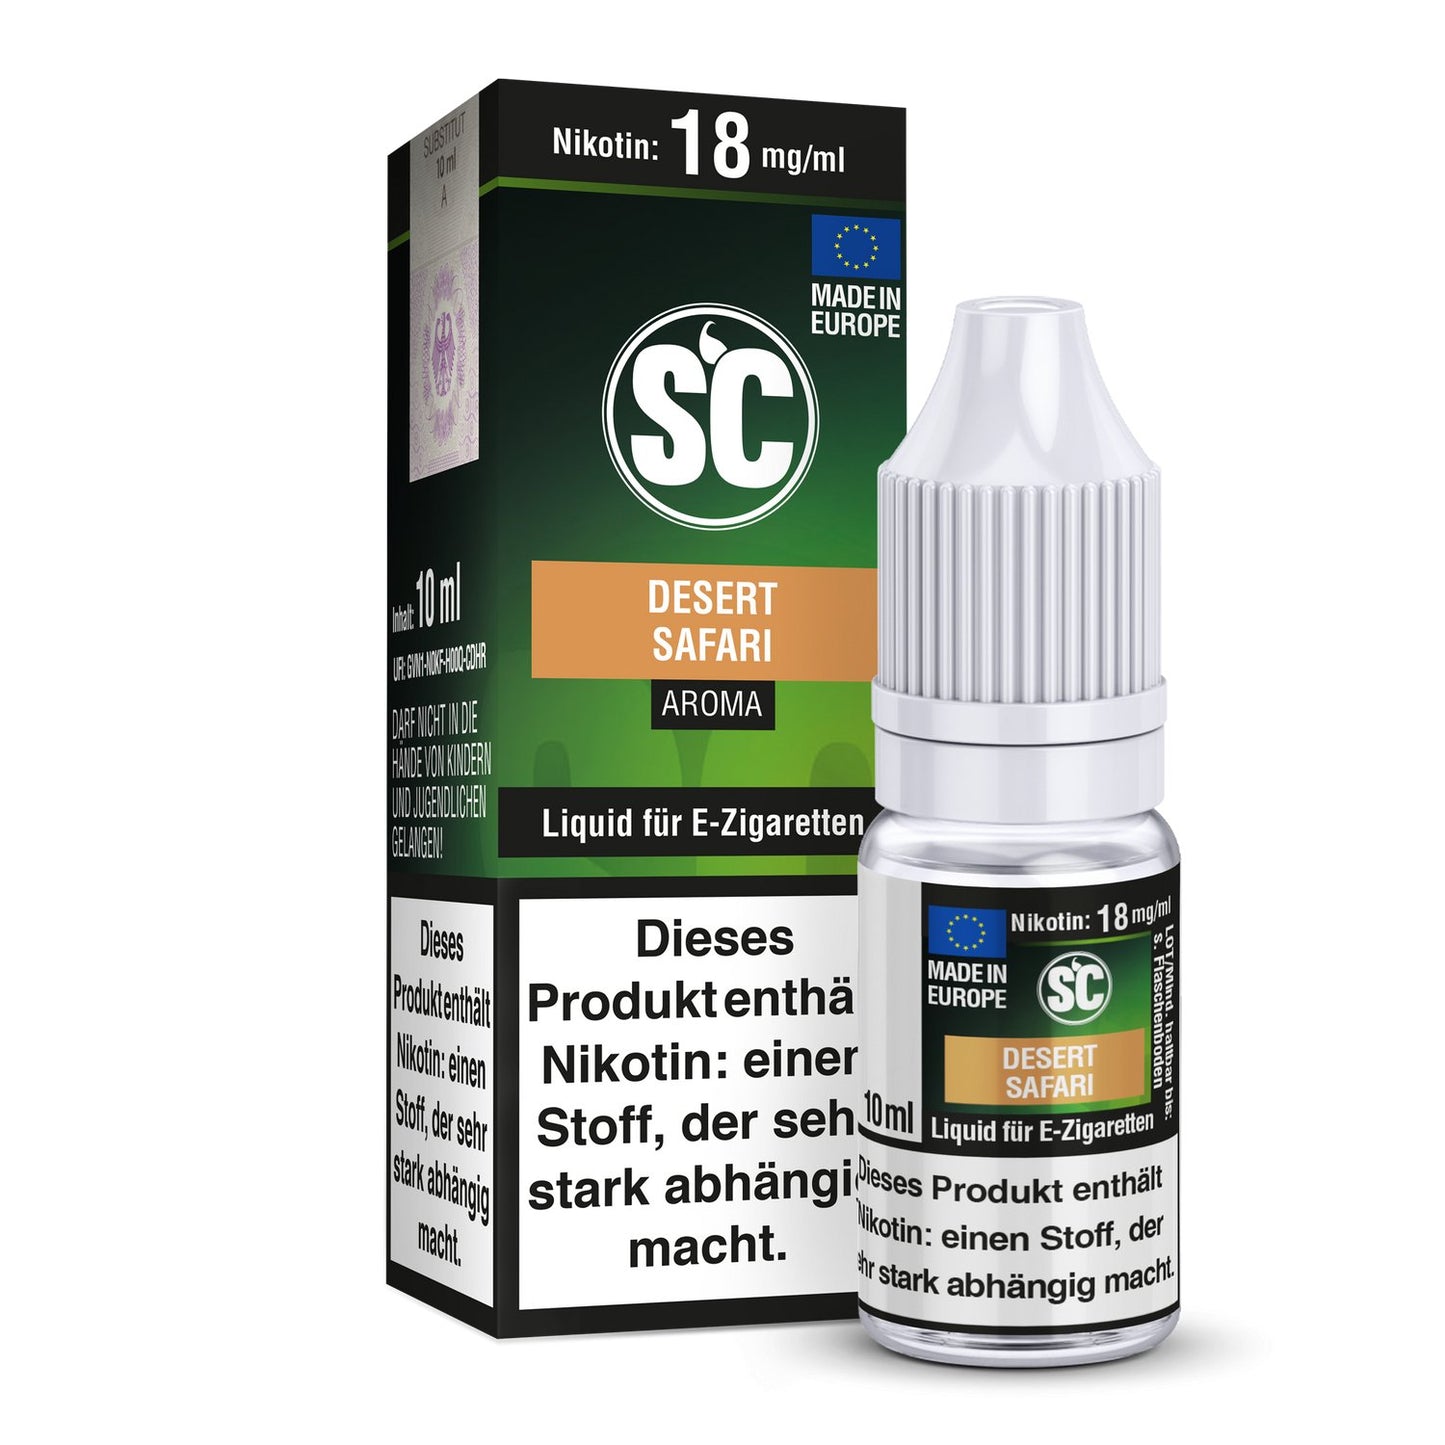 SC - Desert Safari Tabak - 10ml Fertigliquid (Nikotinfrei/Nikotin) - 1er Packung 12 mg/ml - Vapes4you